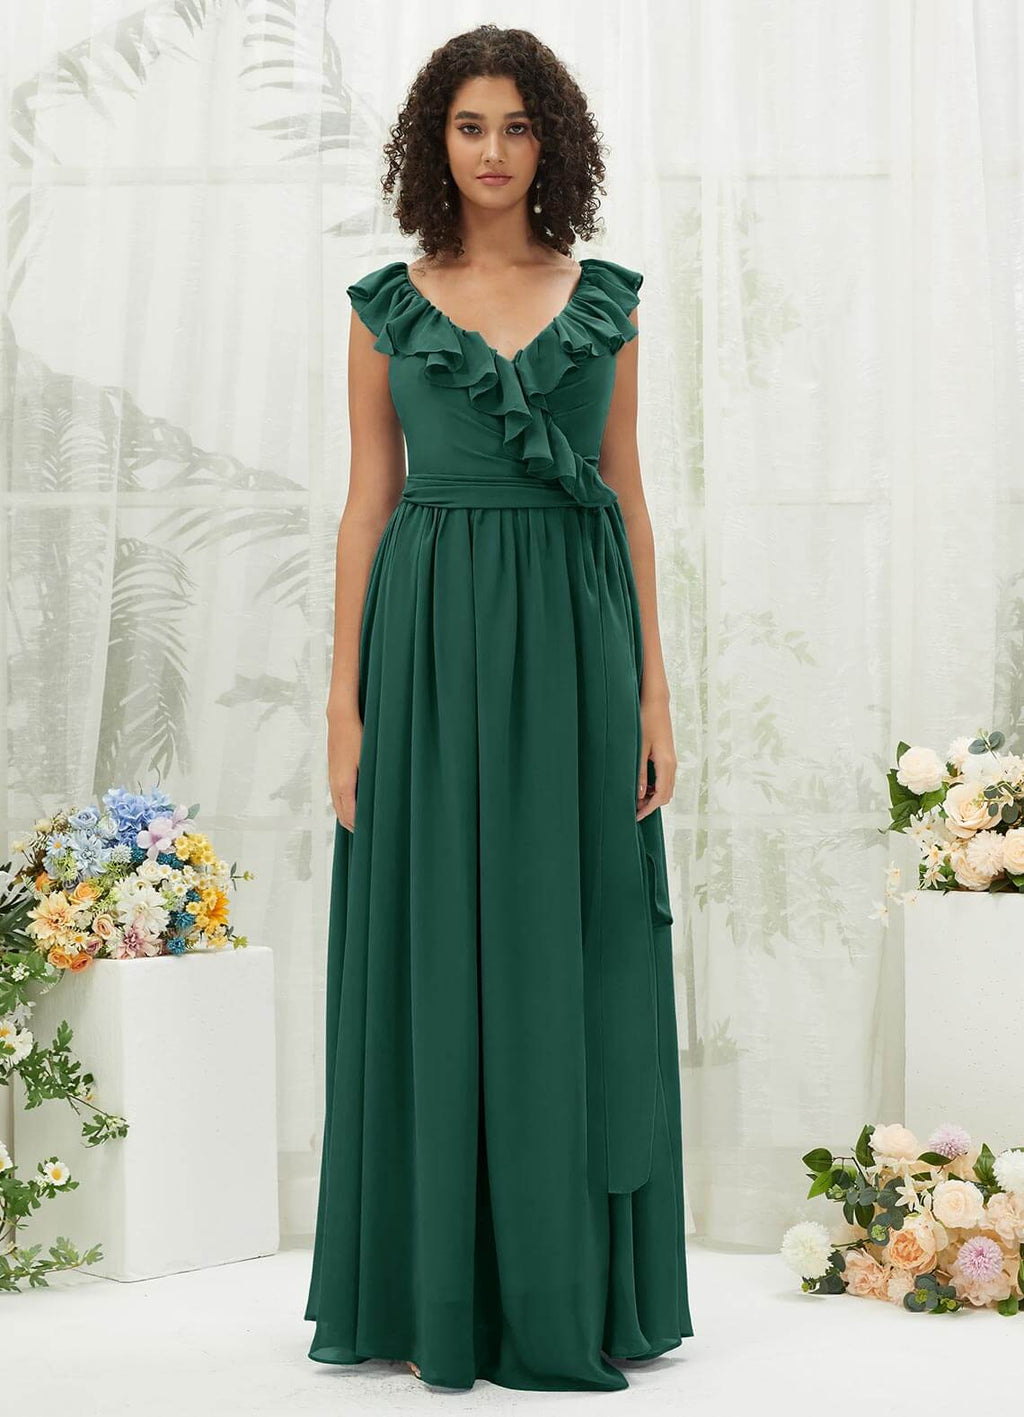 NZ Bridal Cap Sleeves Emerald Green Chiffon bridesmaid dresses R3702 Valerie a